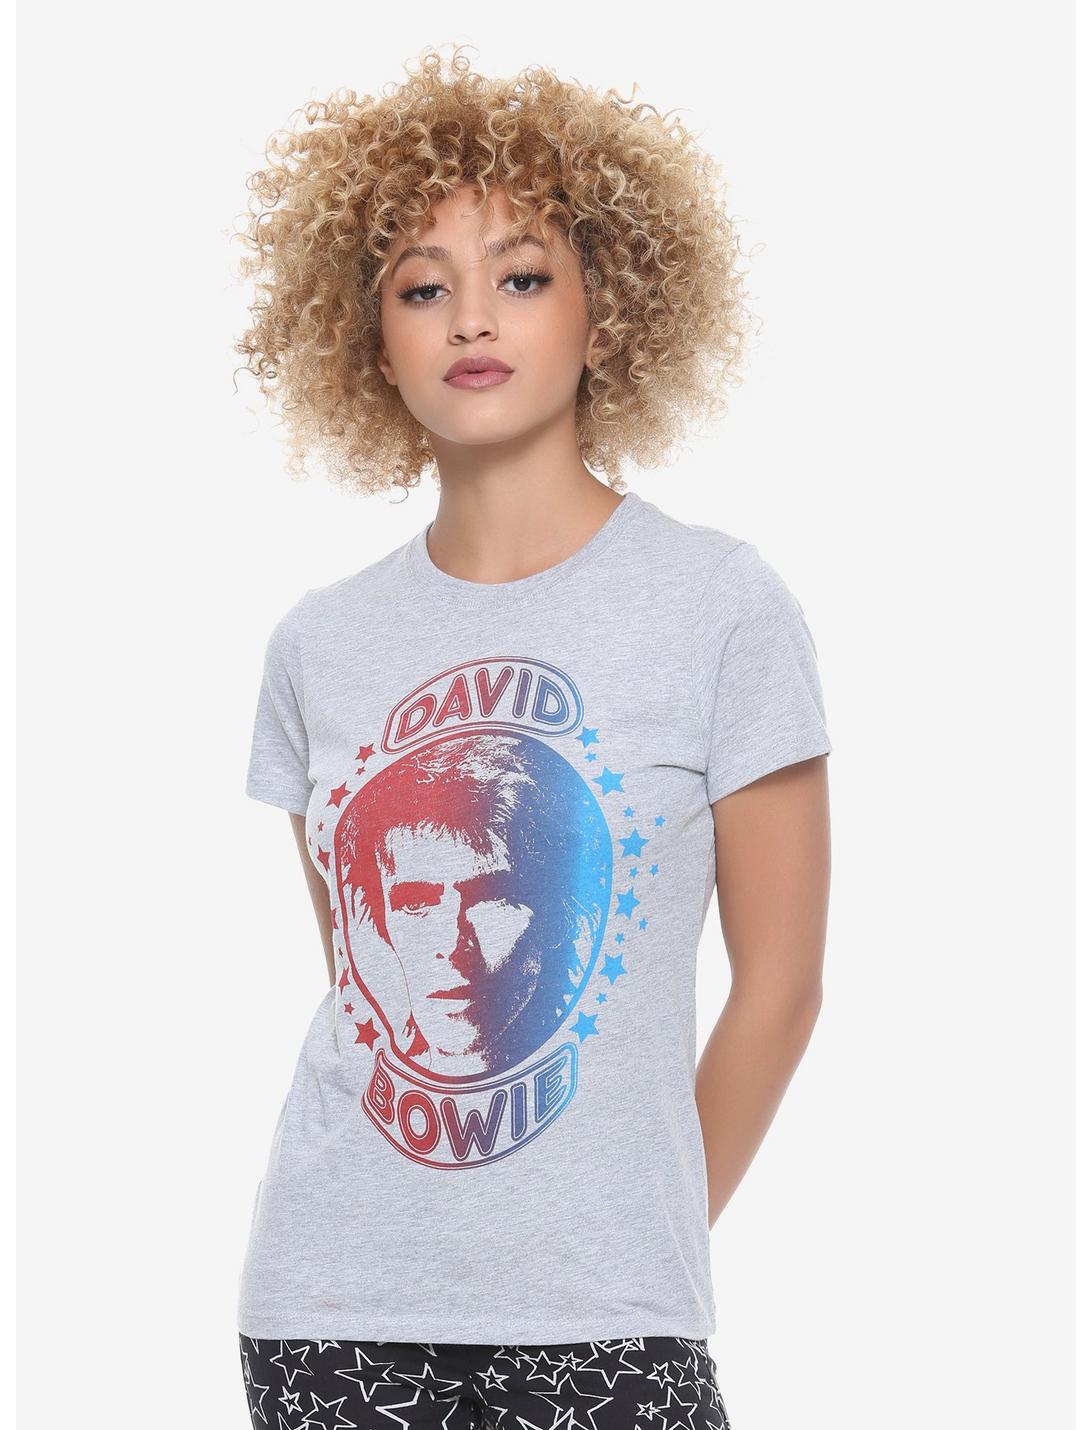 David Bowie Stars Girls T-Shirt, GREY, hi-res